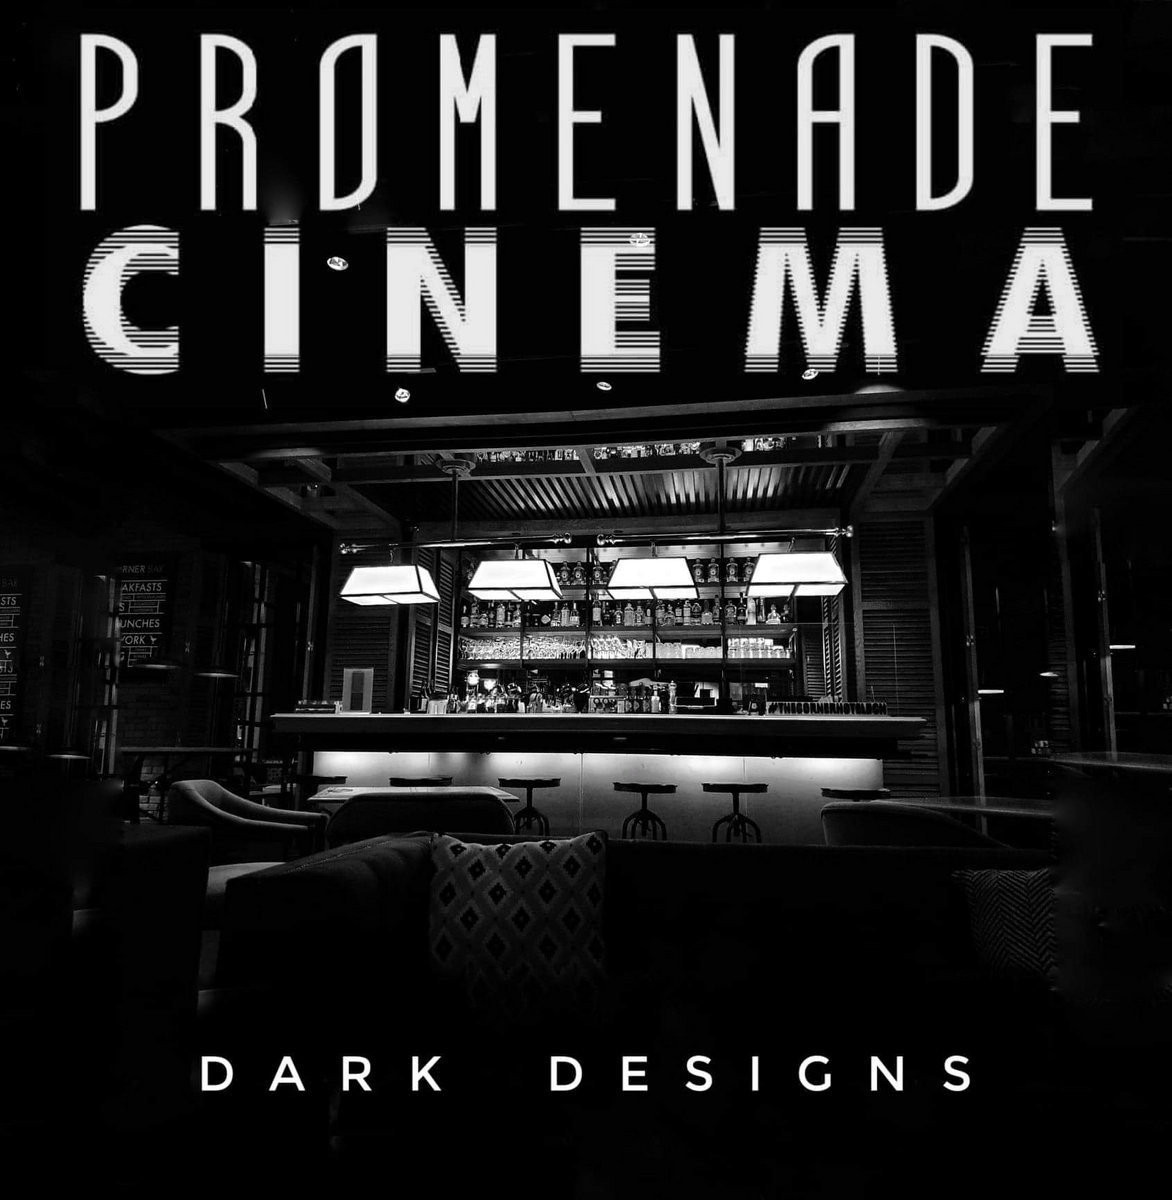 Promenade Cinema, “Dark Designs”